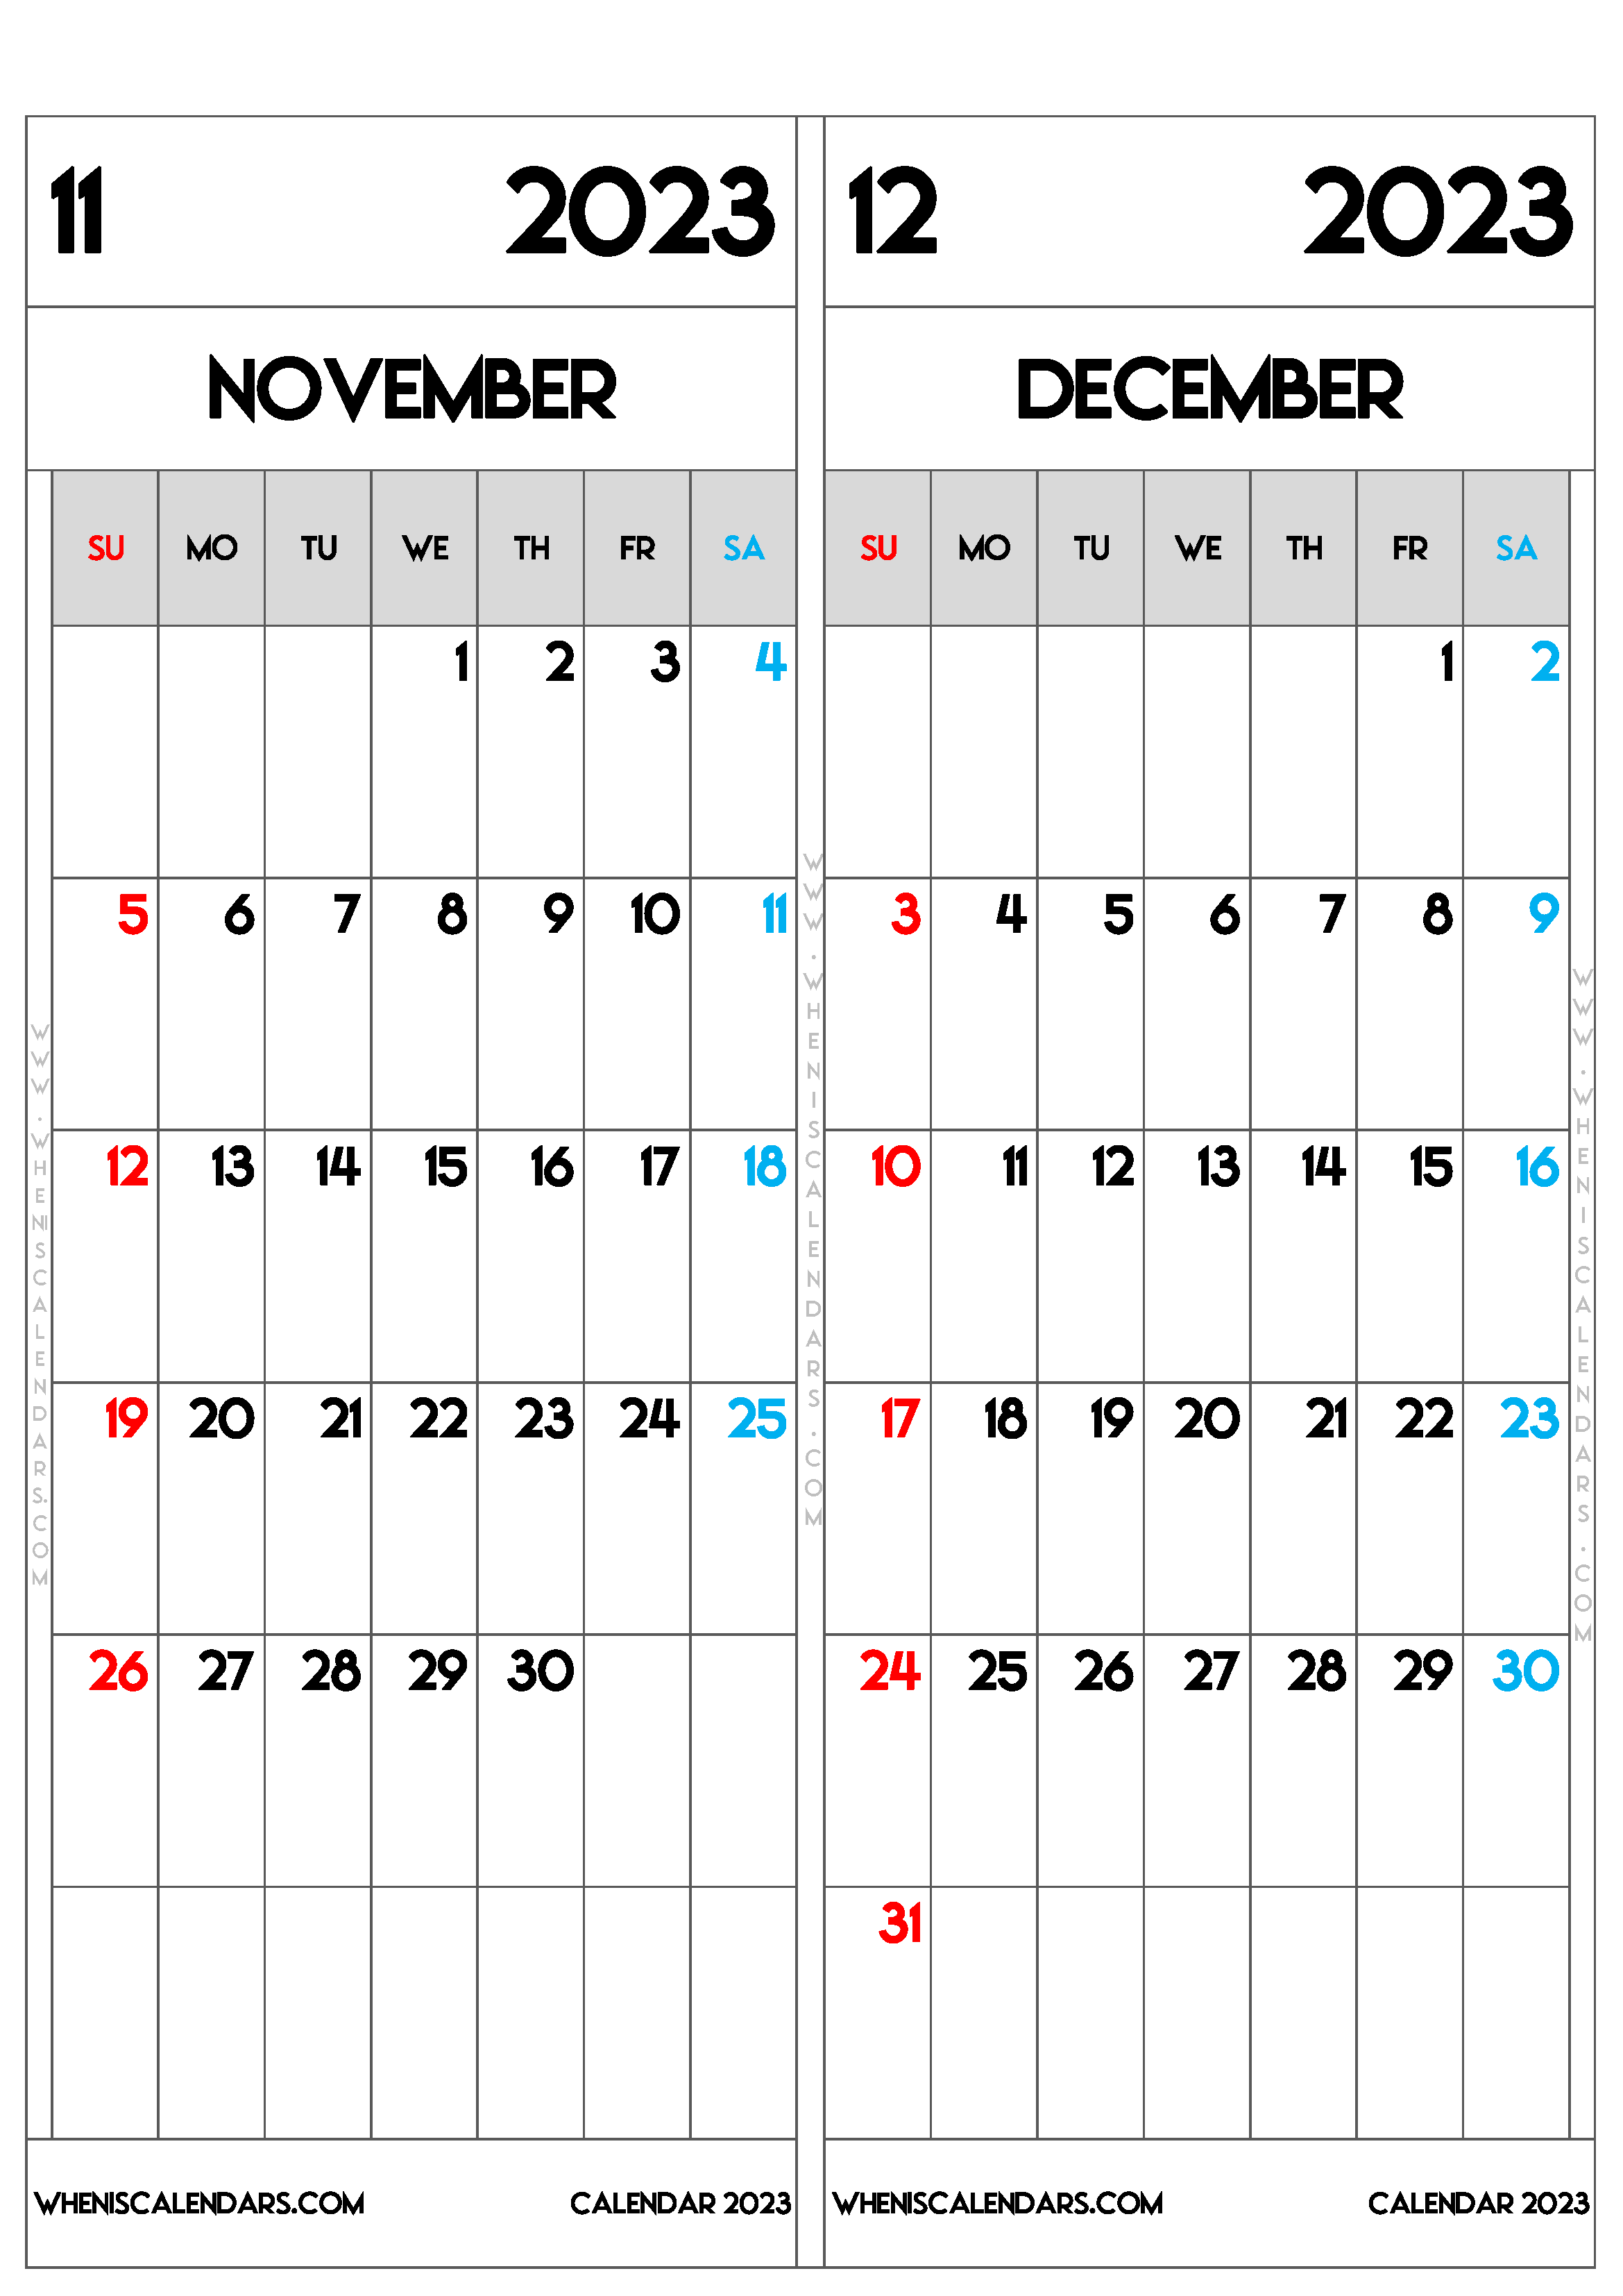 Download Printable November and December 2023 Calendar as PDF and PNG Image